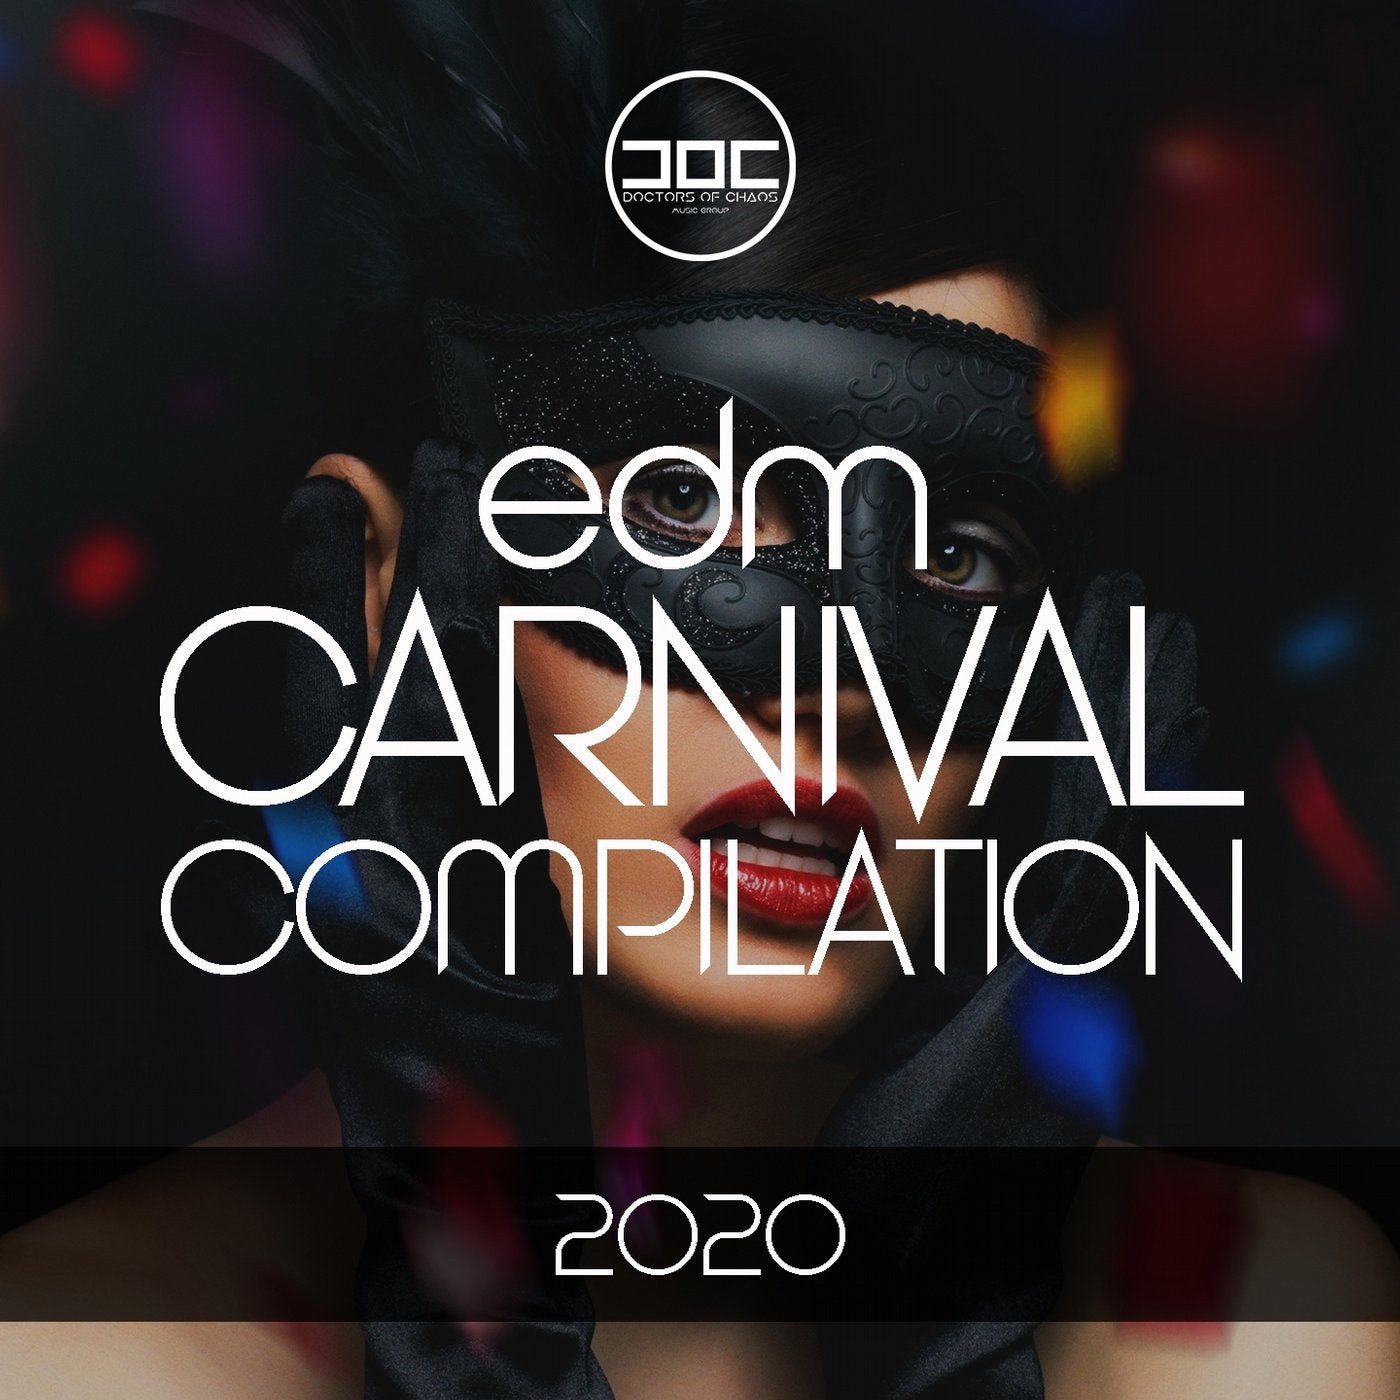 Edm Carnival Compilation 2020 (Best of House - Dance - Electro & Edm)